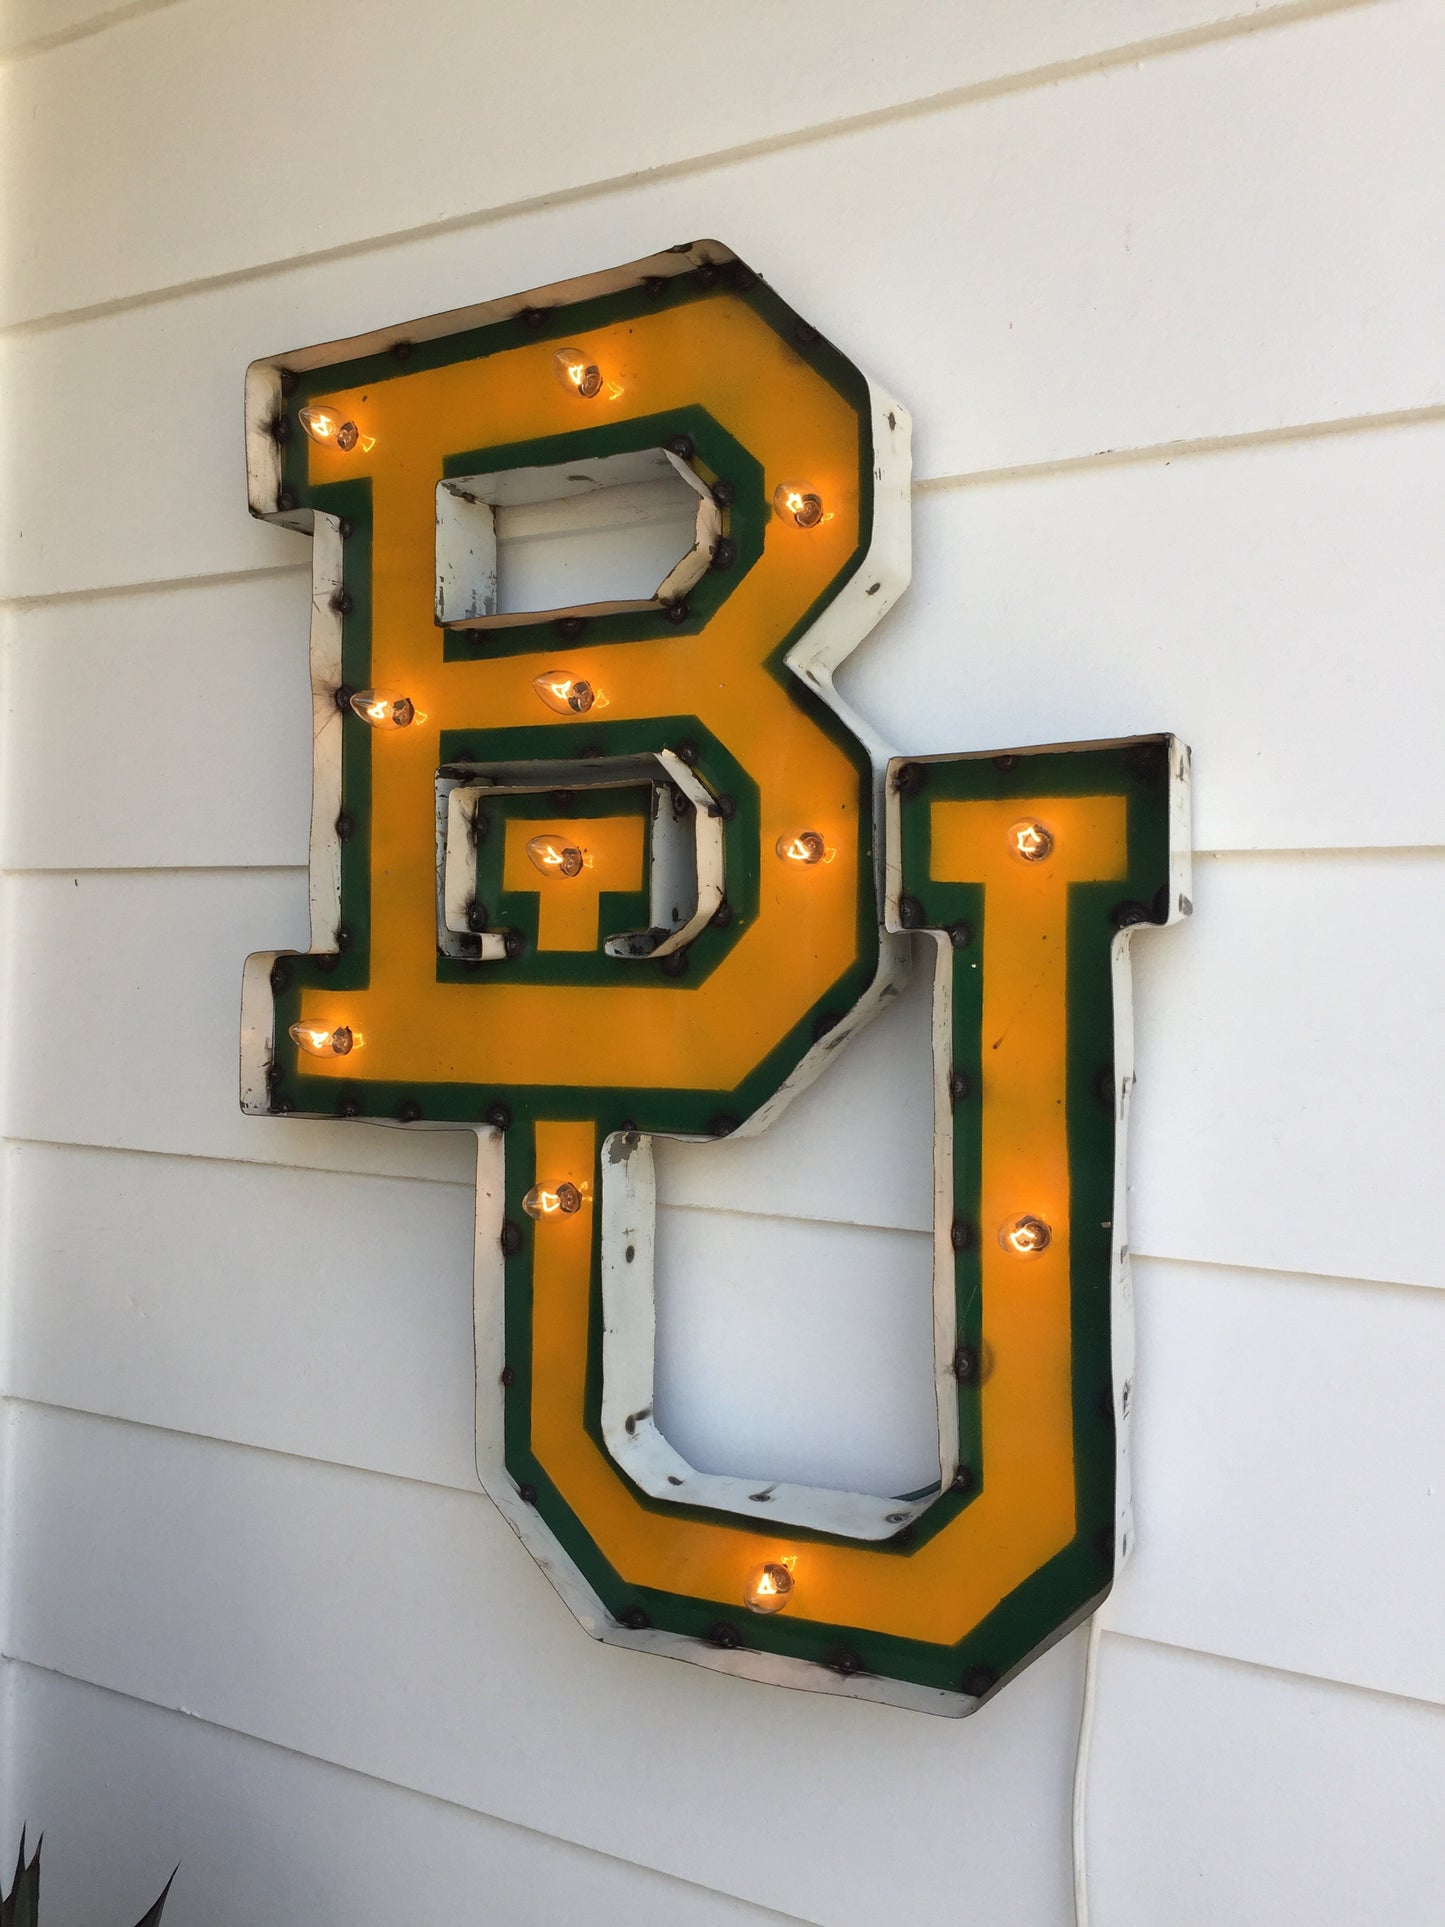 Baylor University "BU" Lighted Recycled Metal Wall Decor